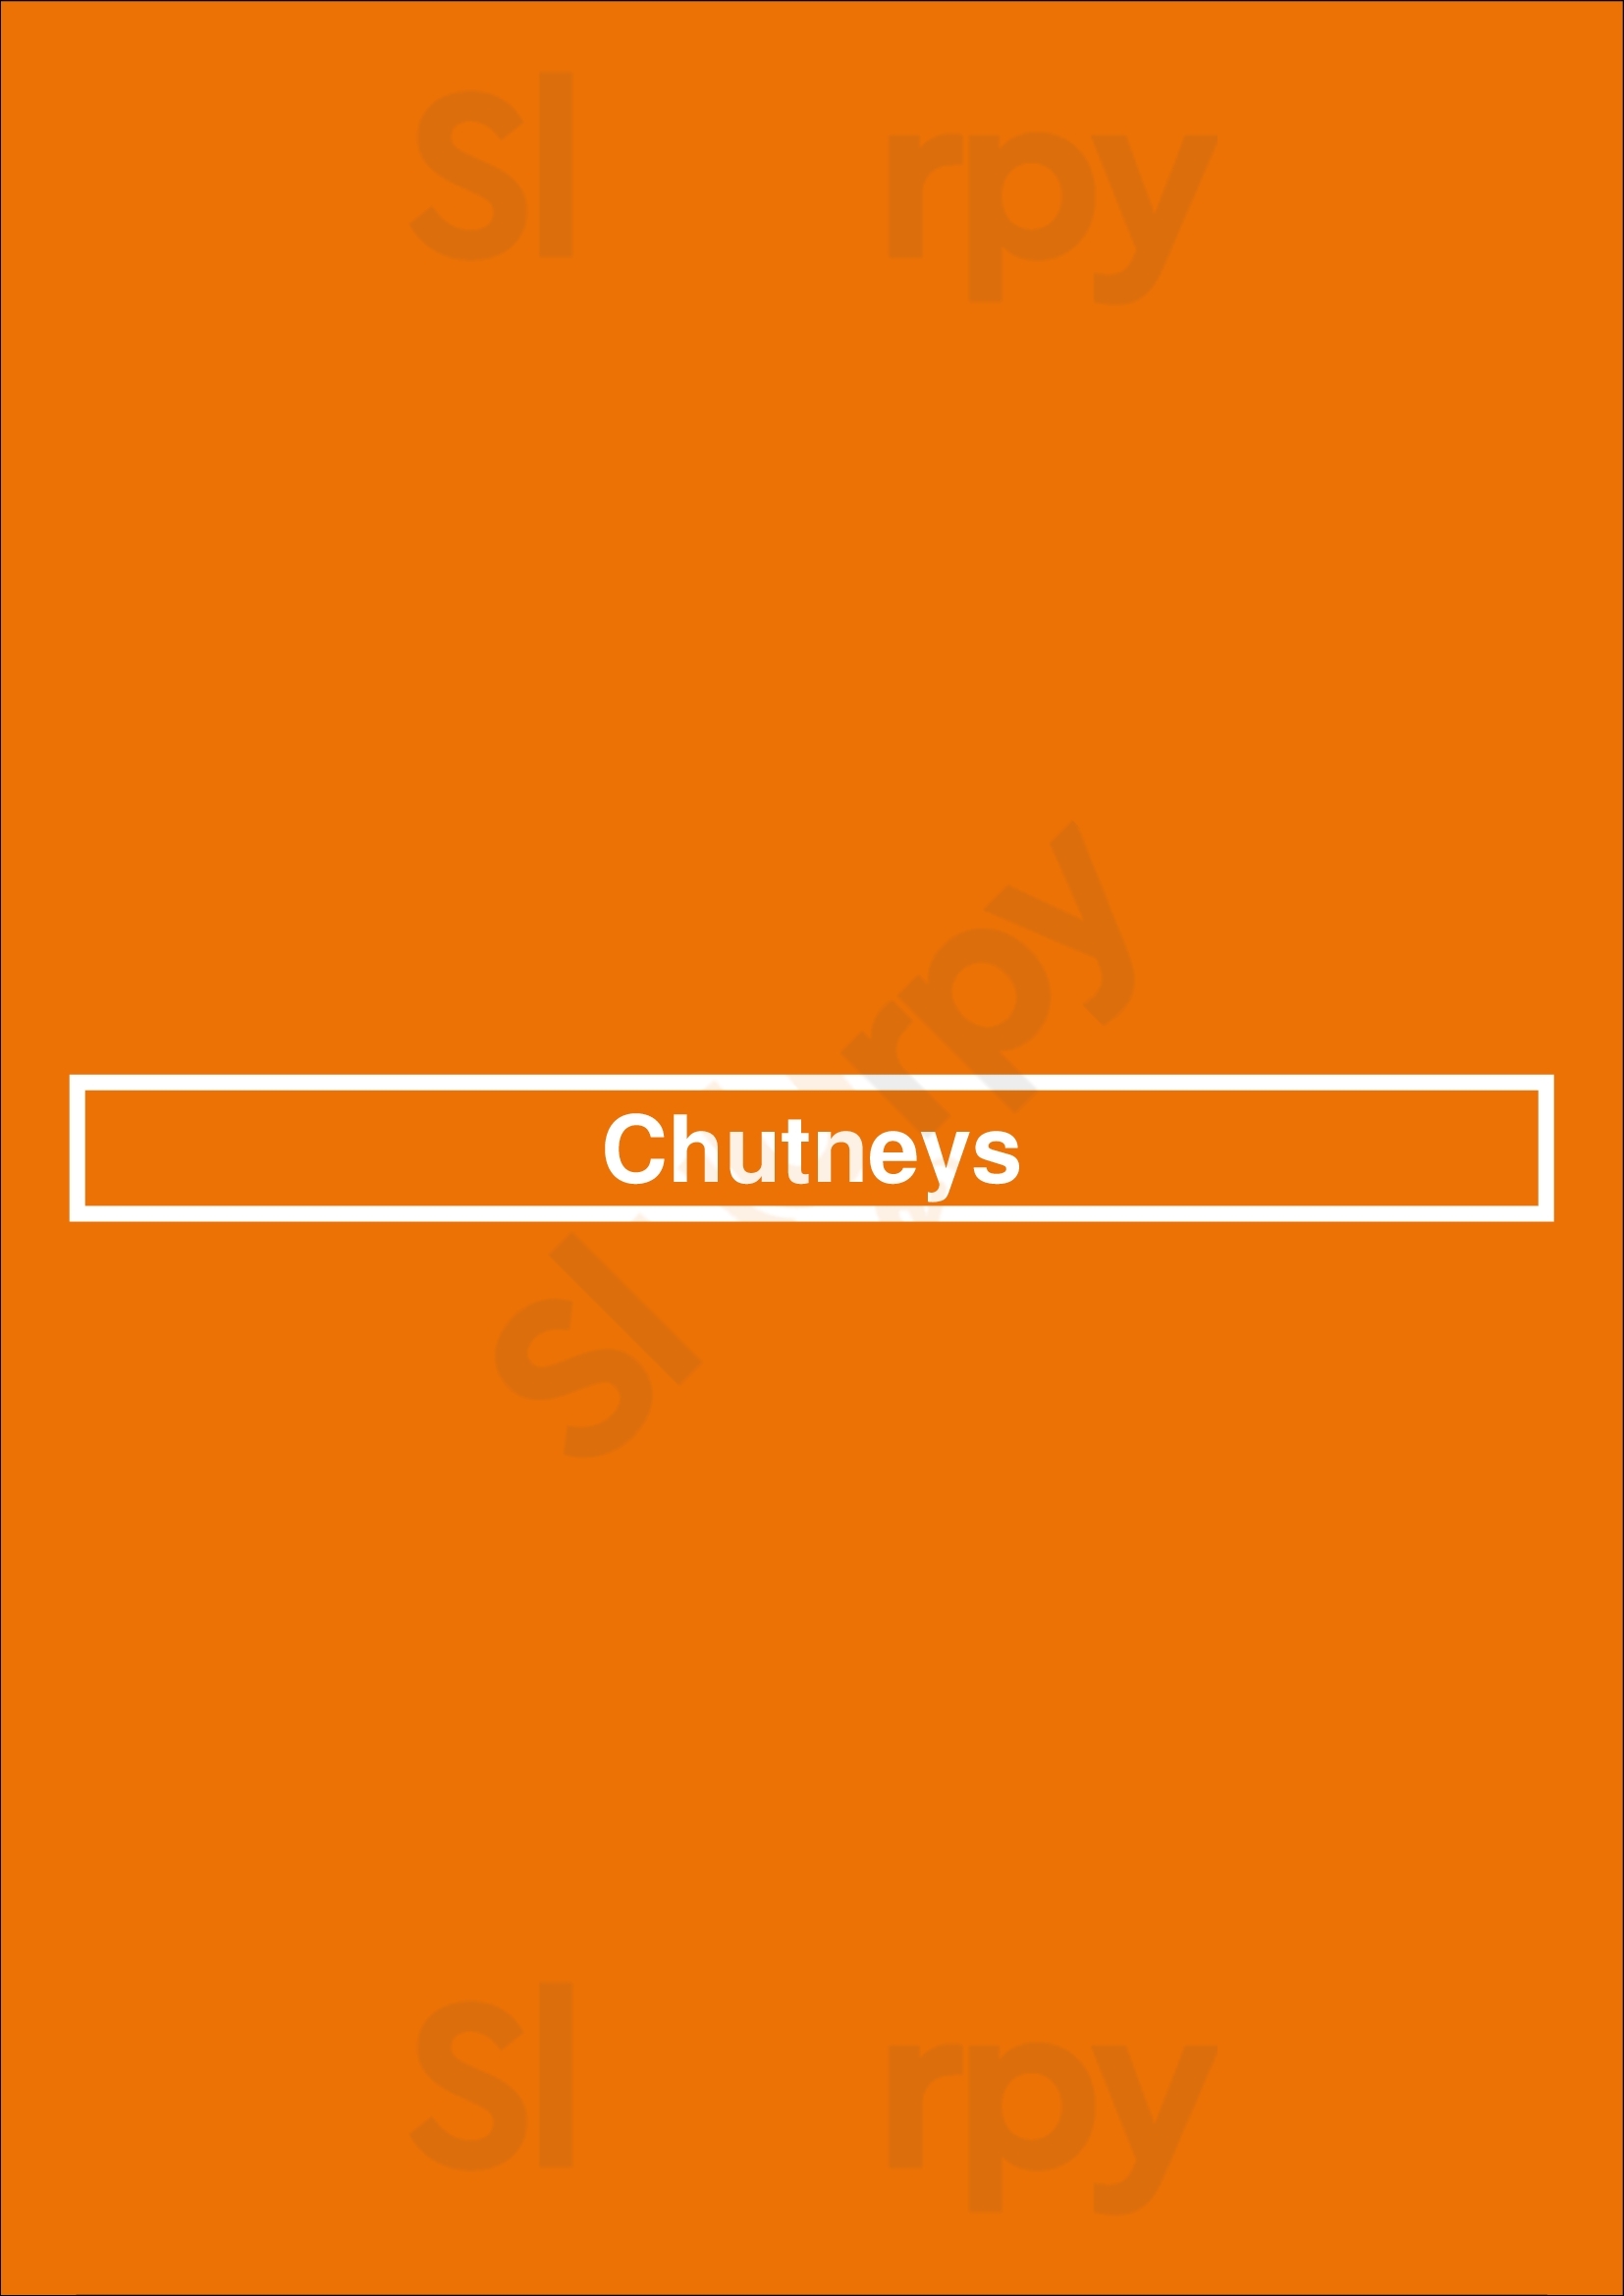 Chutneys Watford Menu - 1